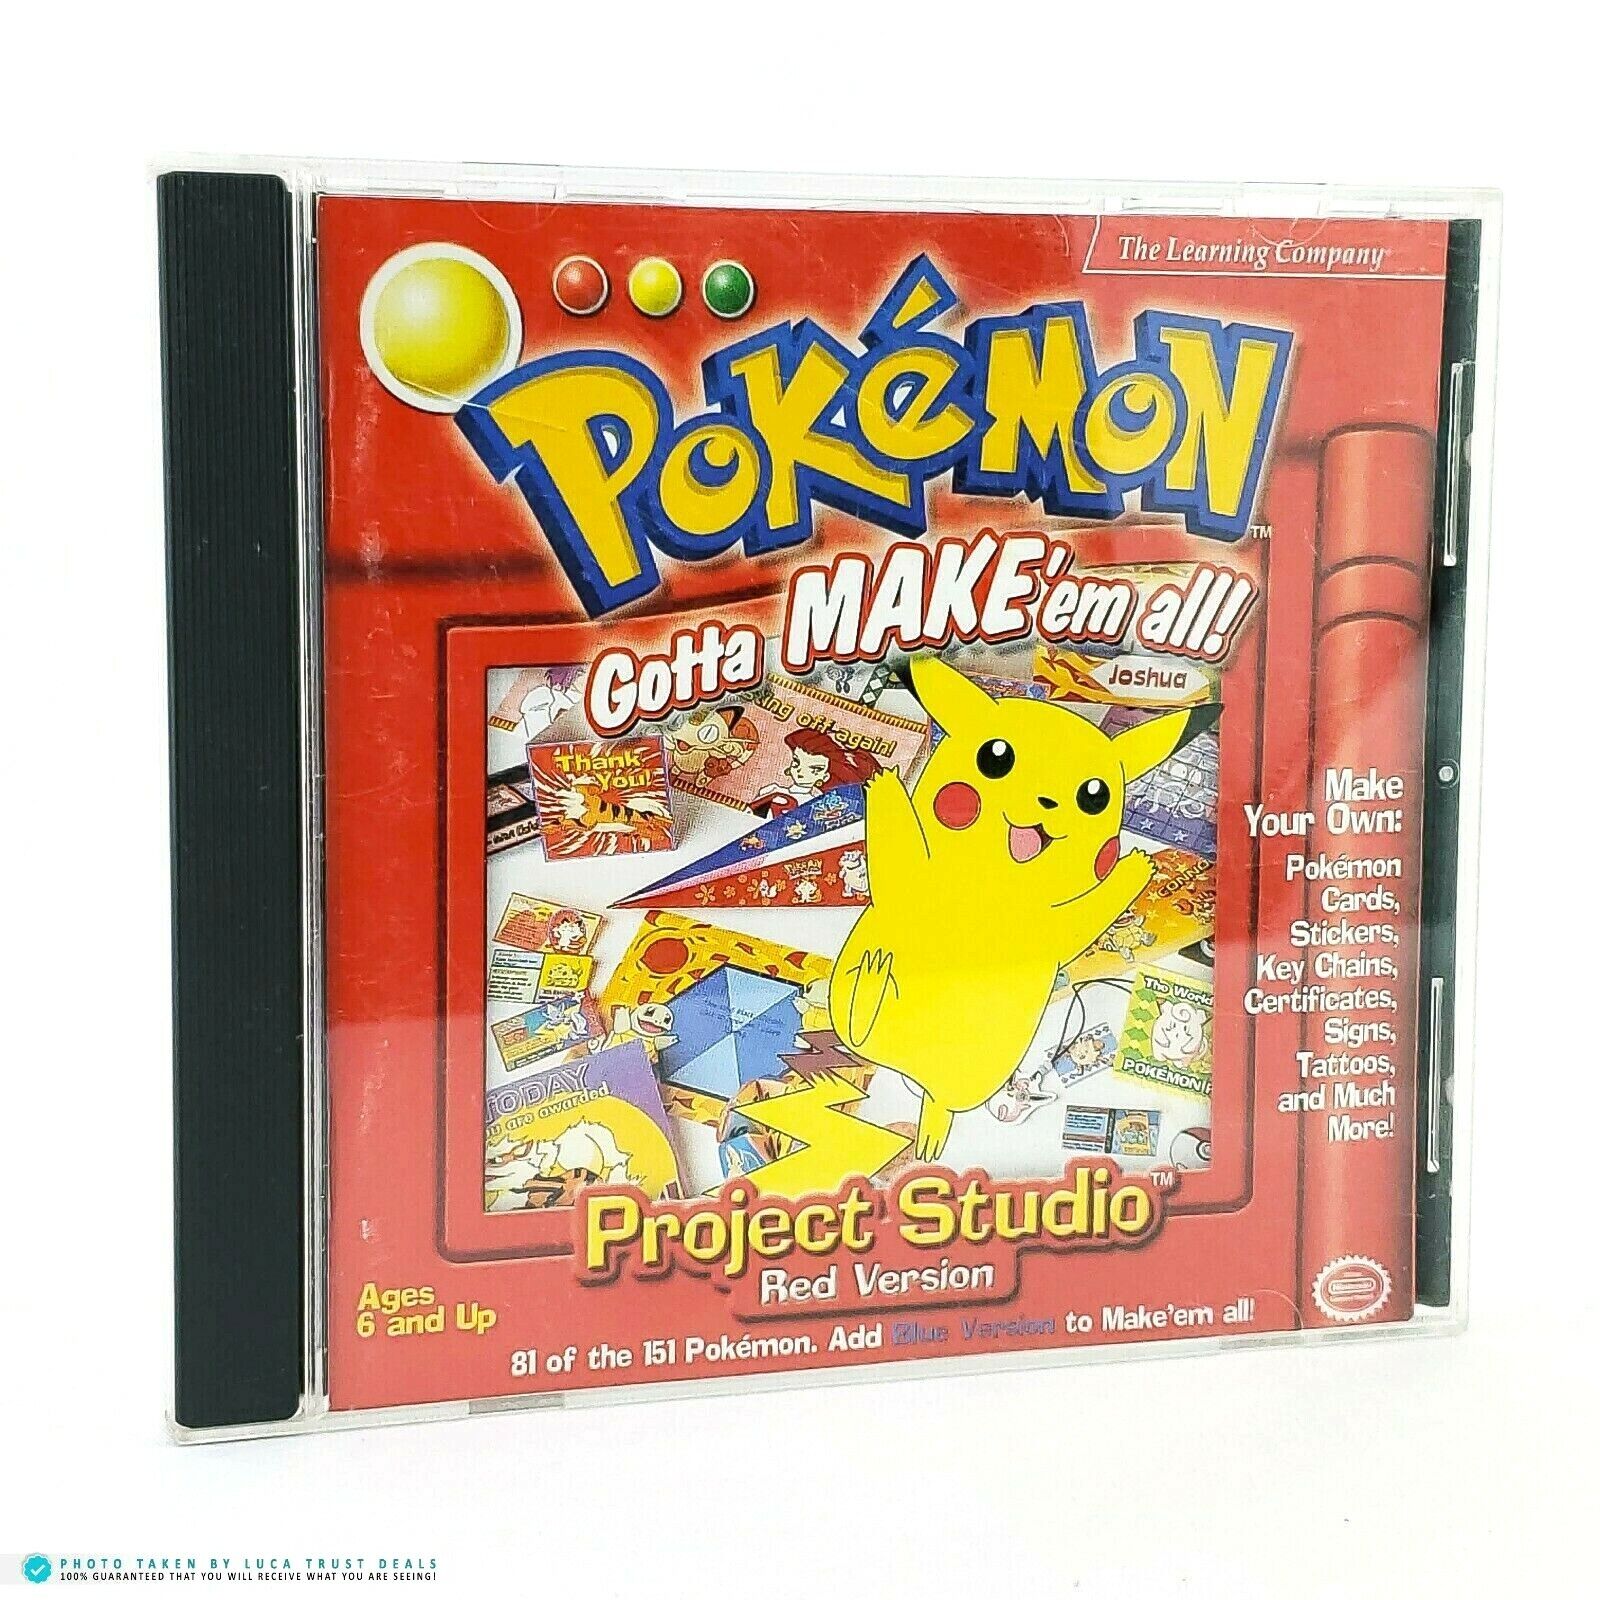 Pokemón CD ROM Gotta Make’em All Project Studio Red Version 1999